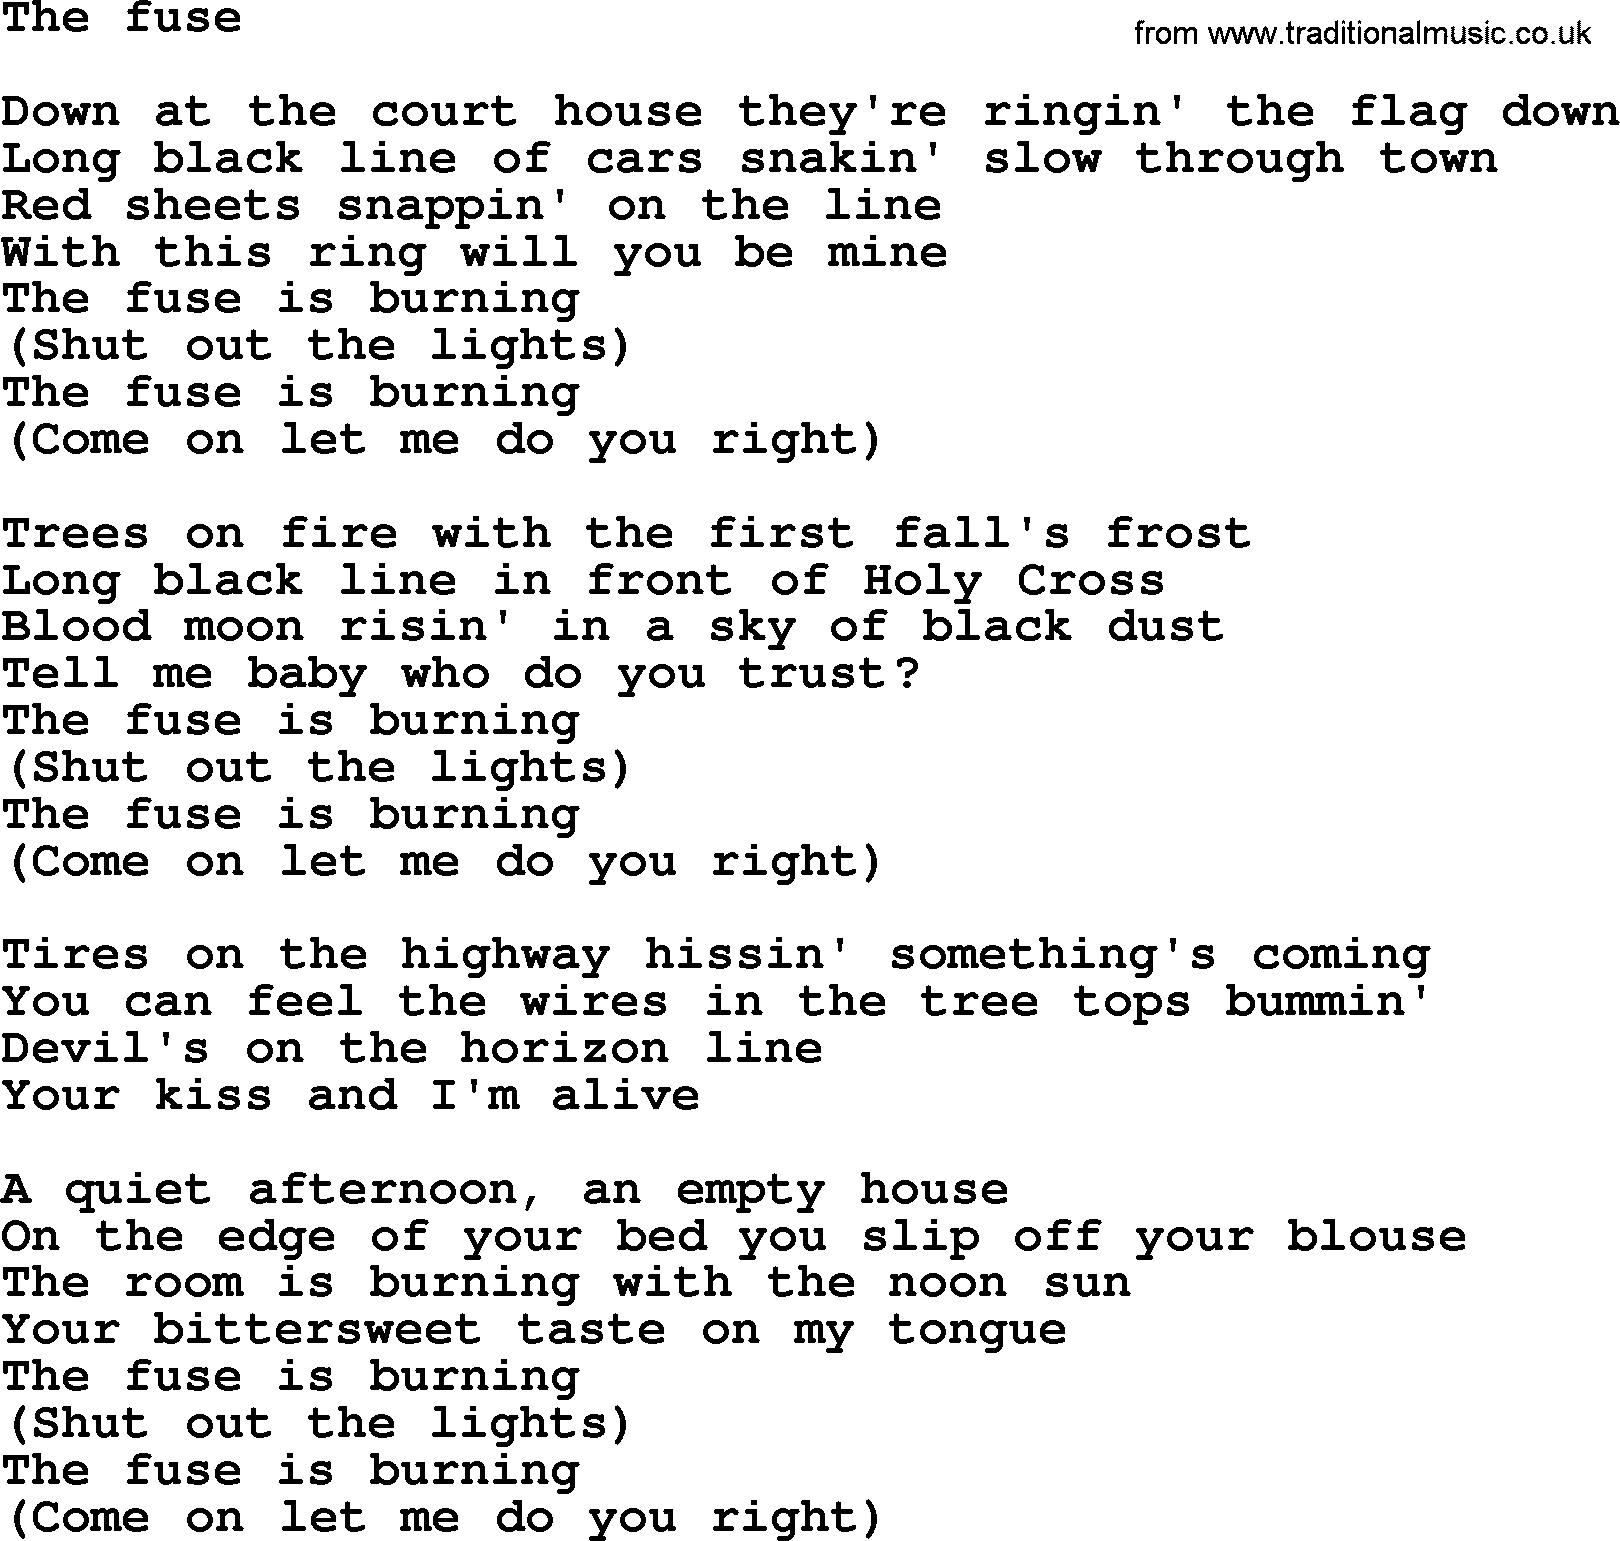 Bruce Springsteen song: The Fuse lyrics